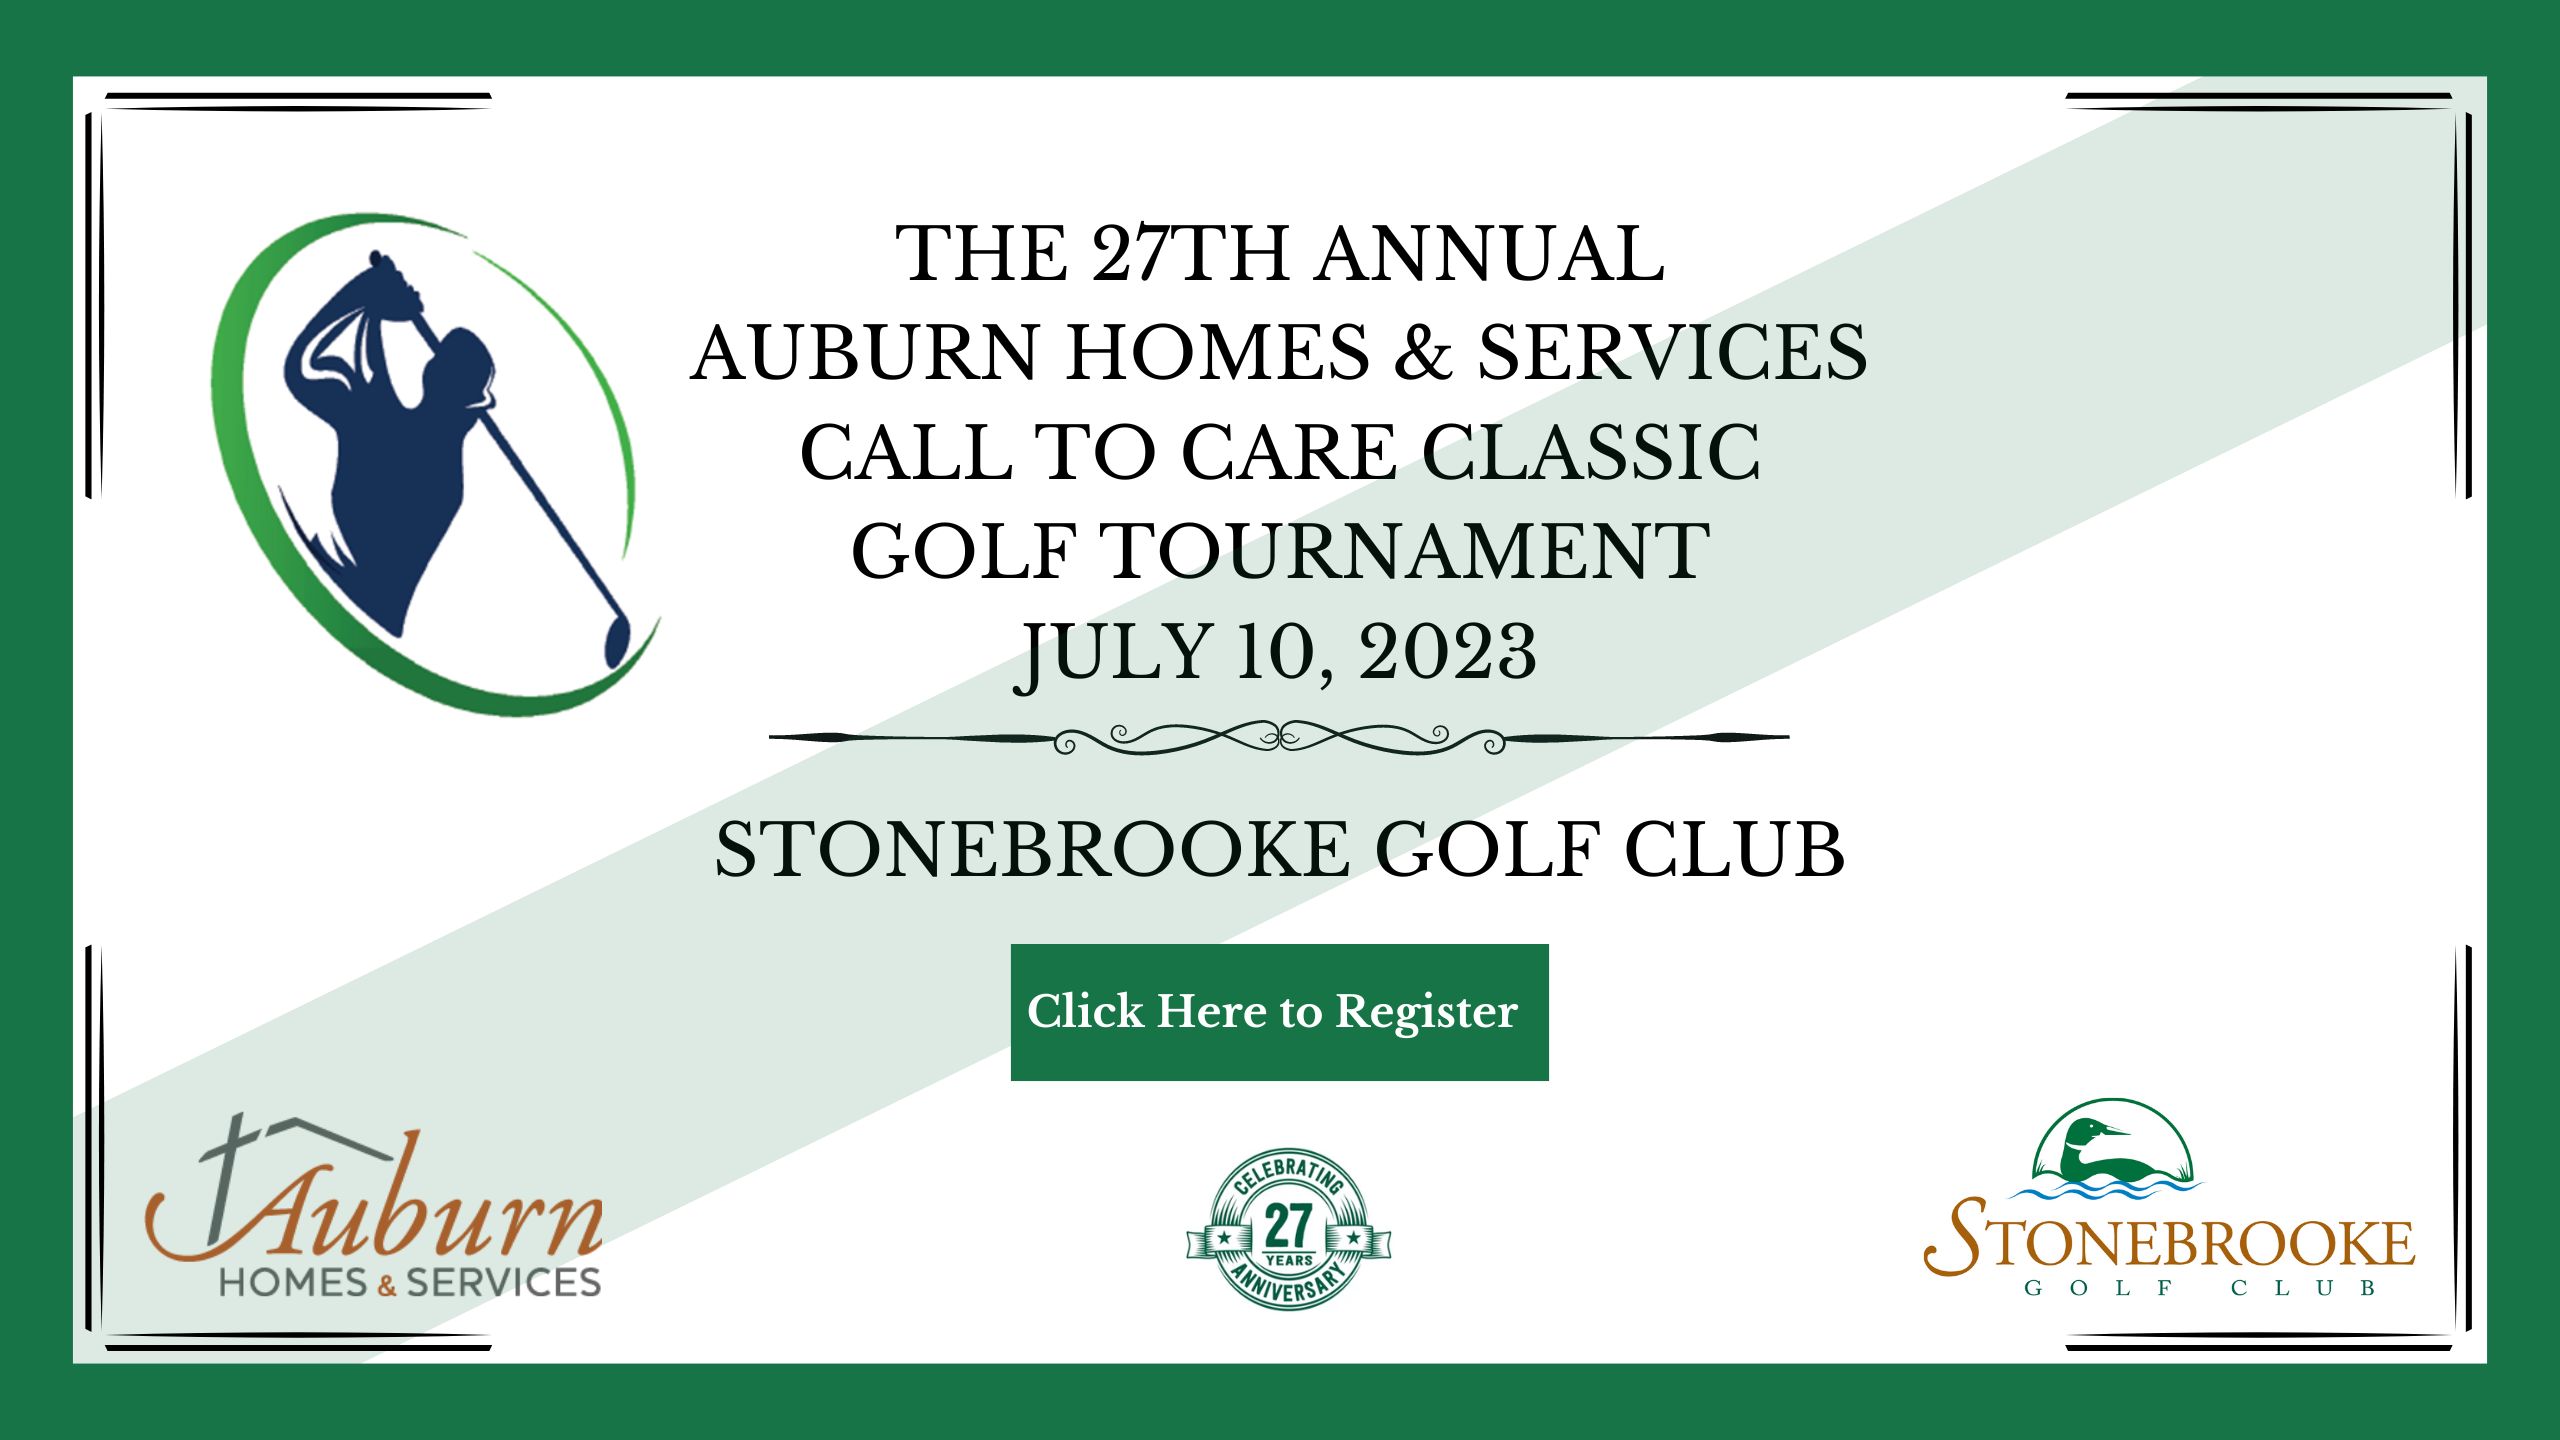 The 27th Annual Auburn Homes & Services Call to Care Classic Golf Tournament Invitation